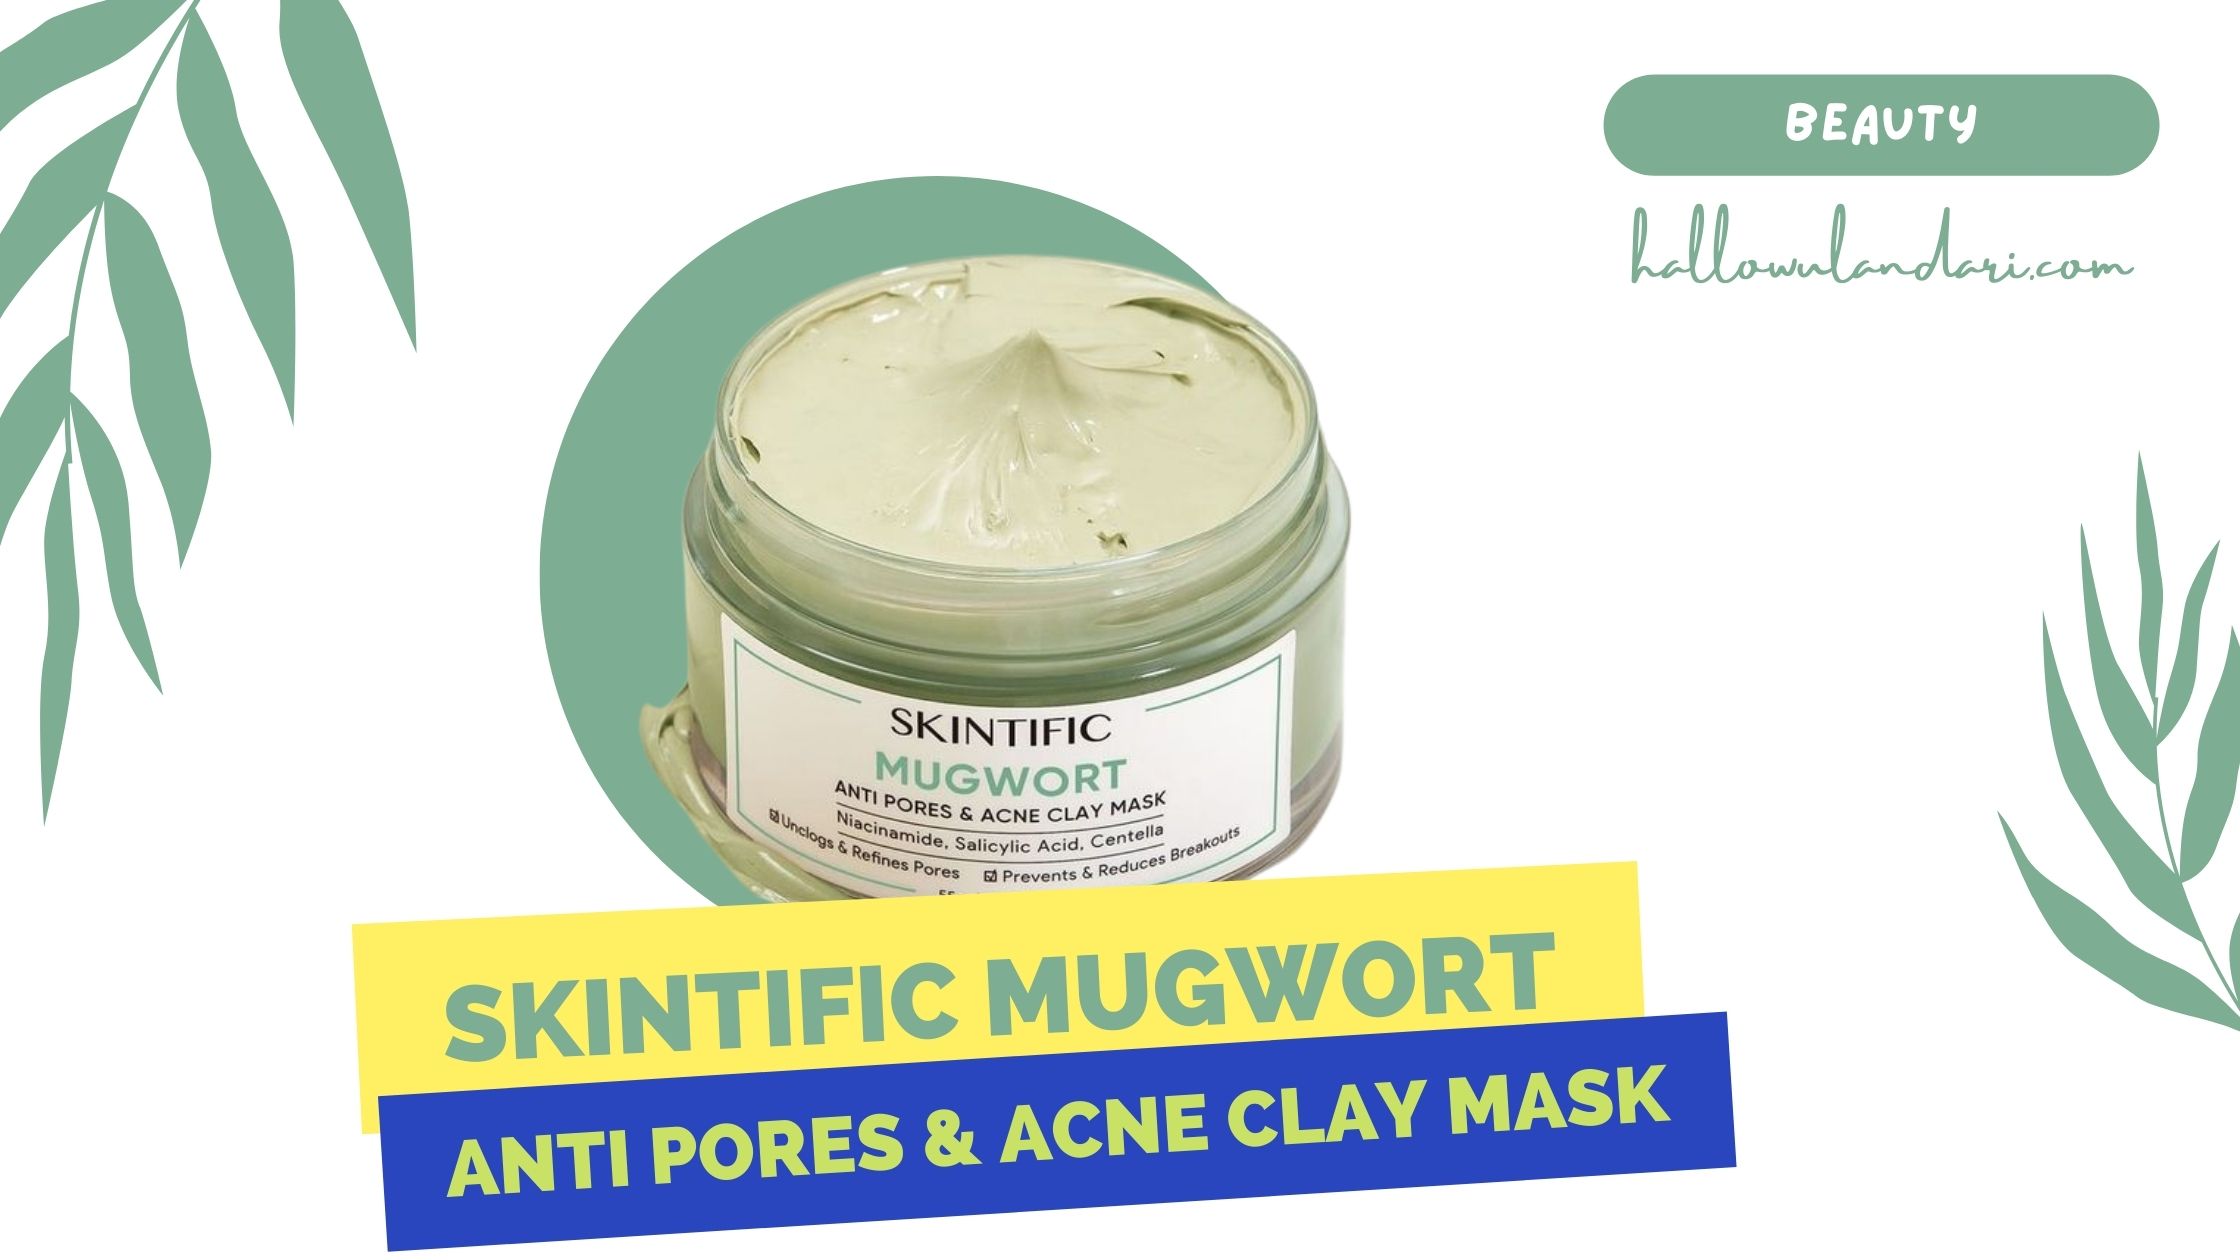 Packaging Skintific Mugwort Anti Pores & Acne Clay Mask